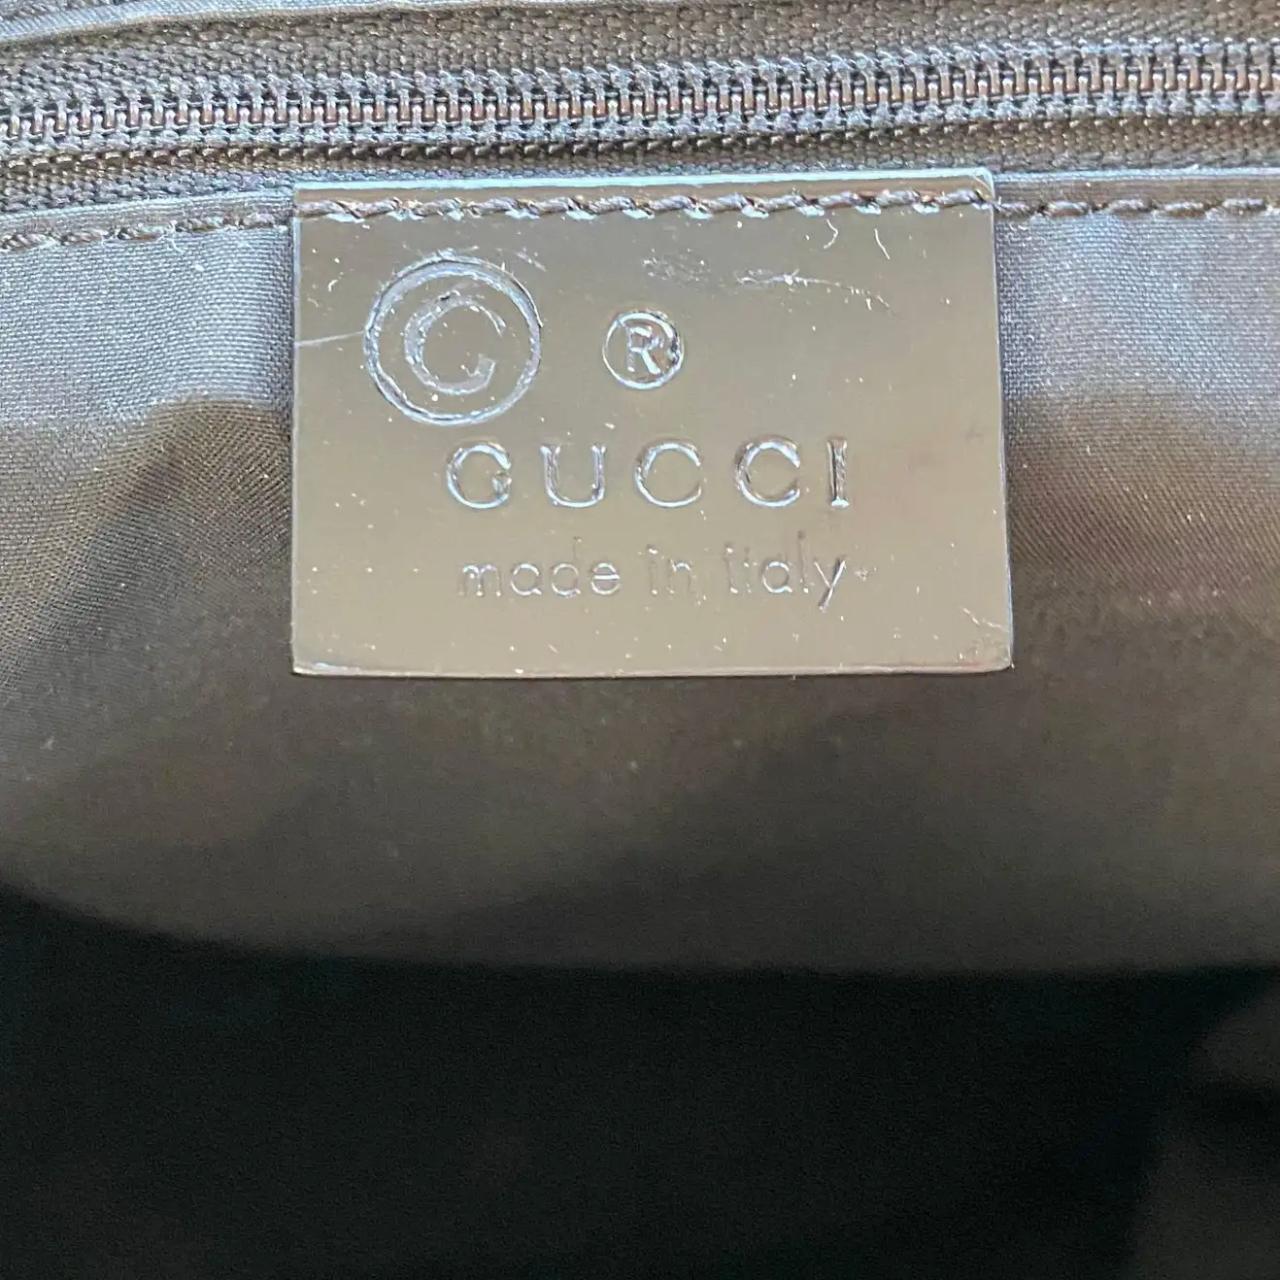 Gucci Havana S/S 2000 Printed Hobo Bag